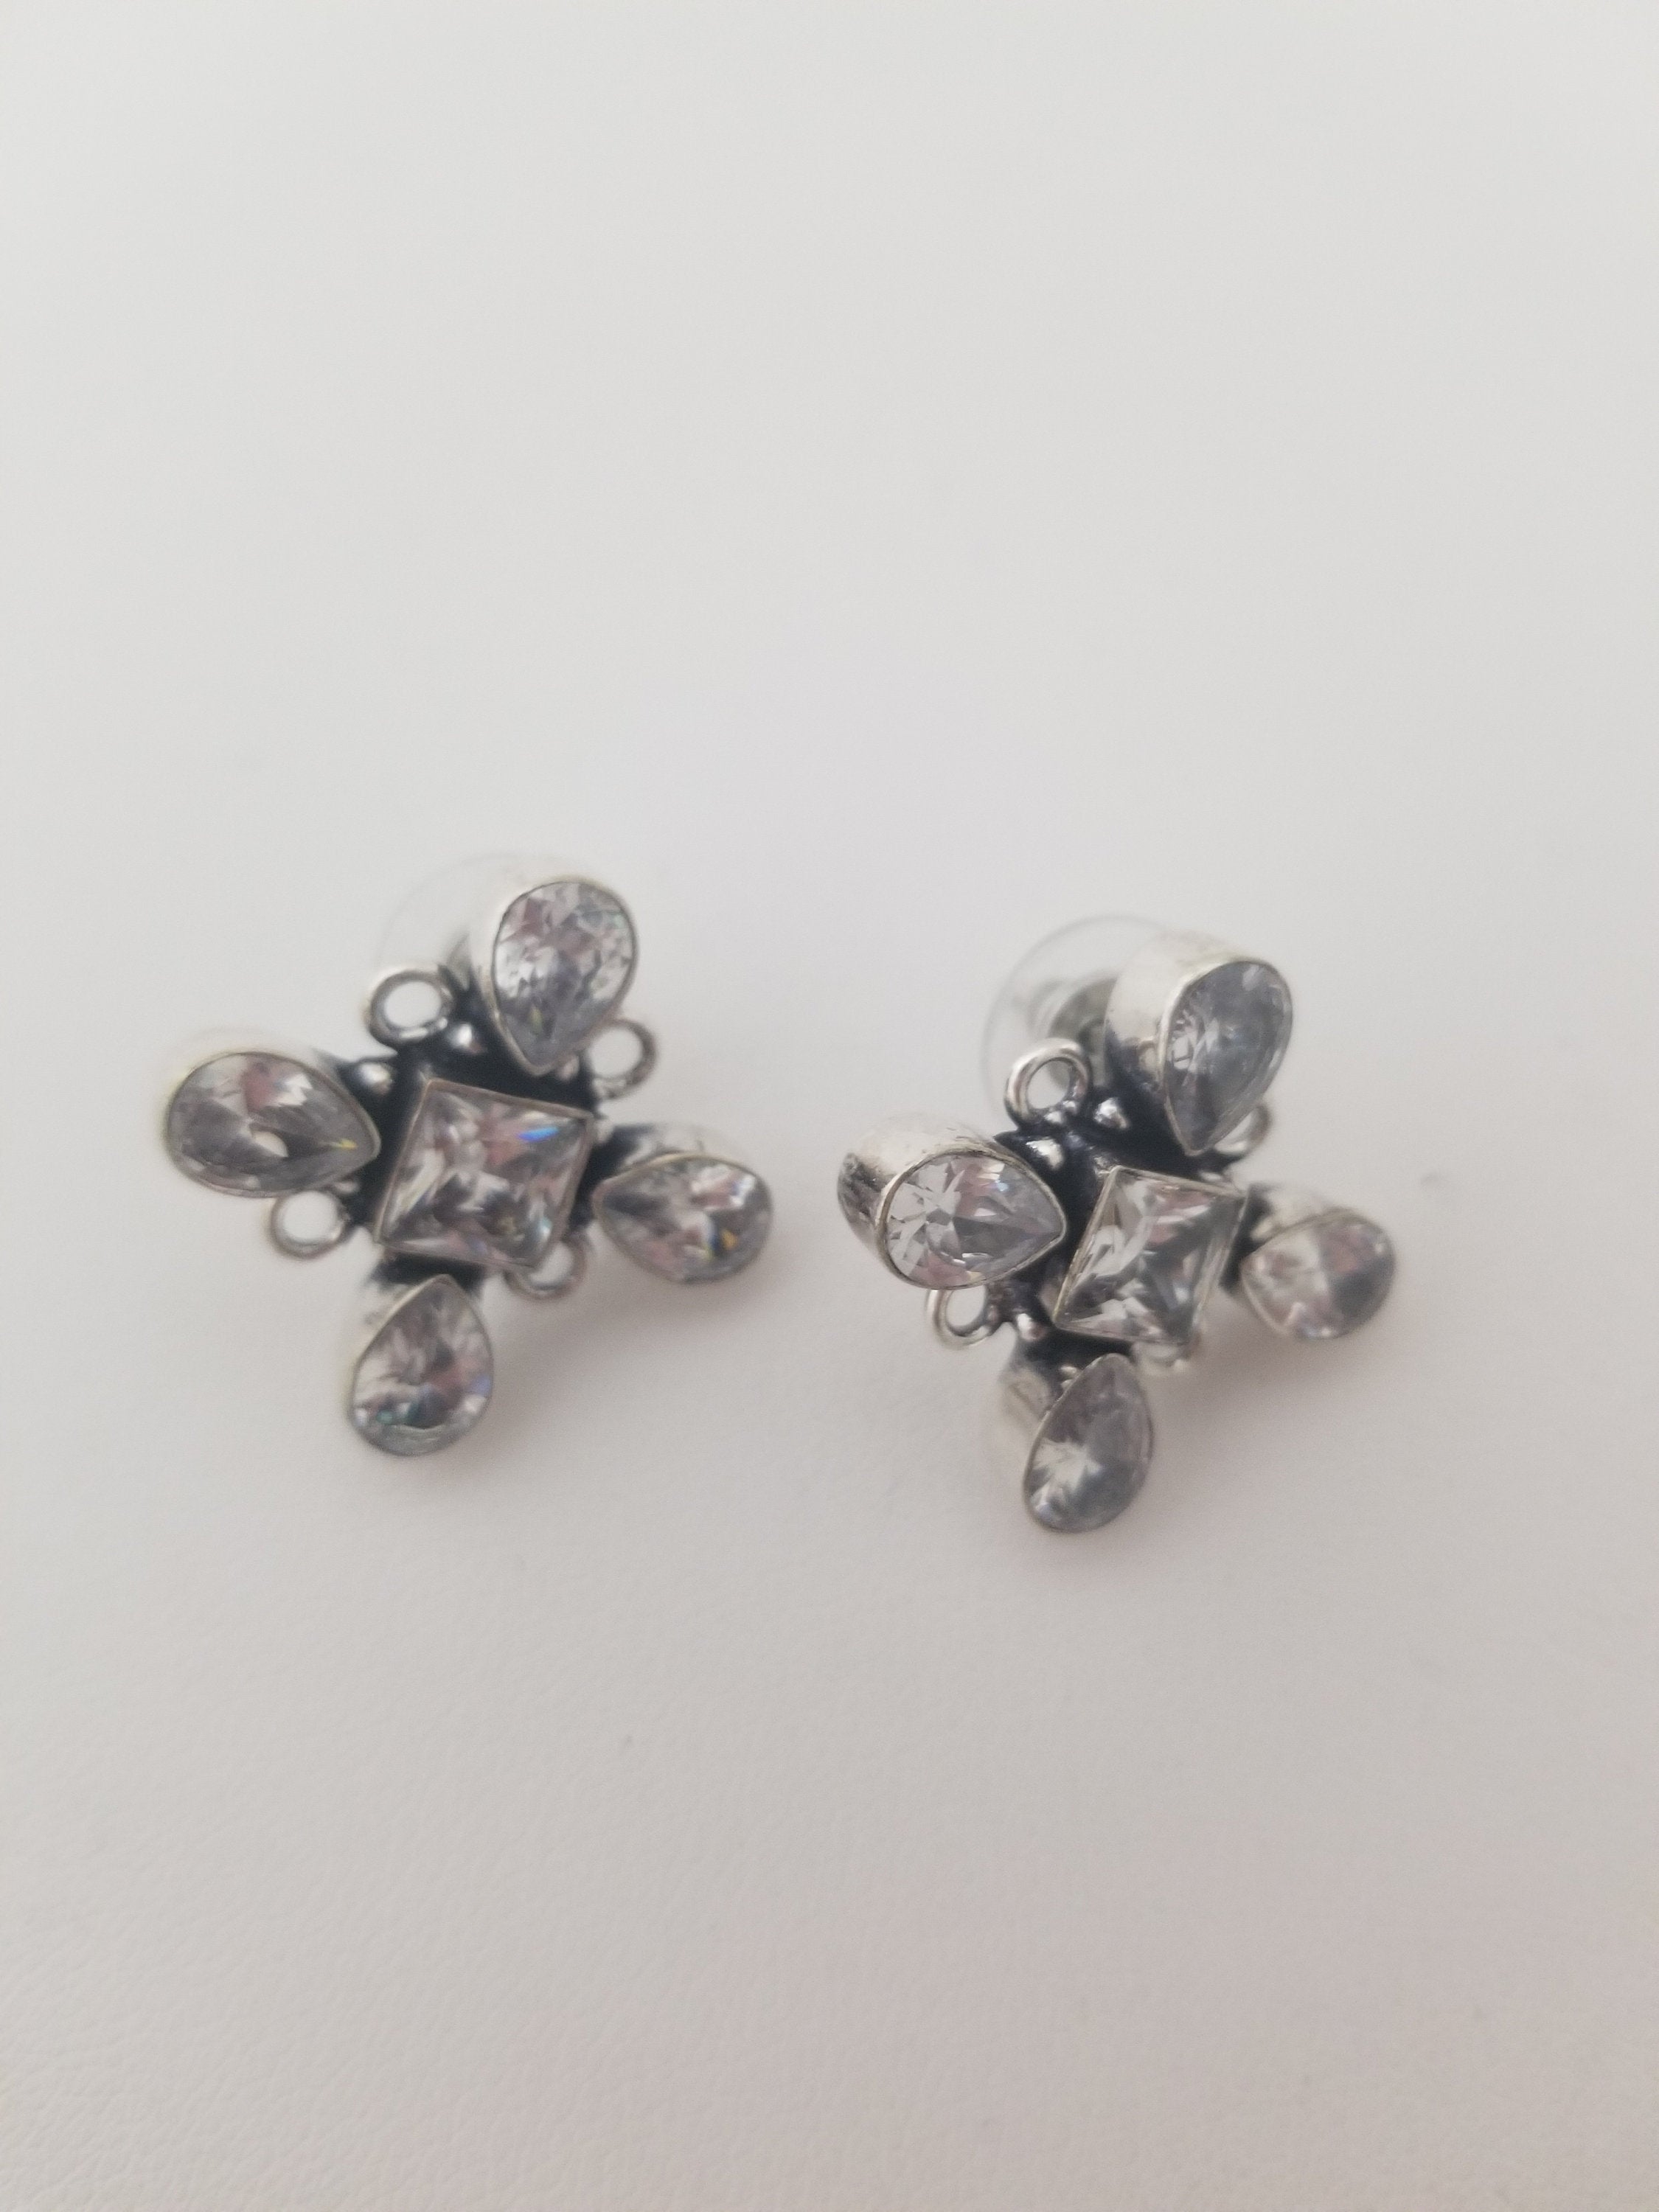 Oxidized white stones Earrings Jhumki Jhumka for Women and Girls